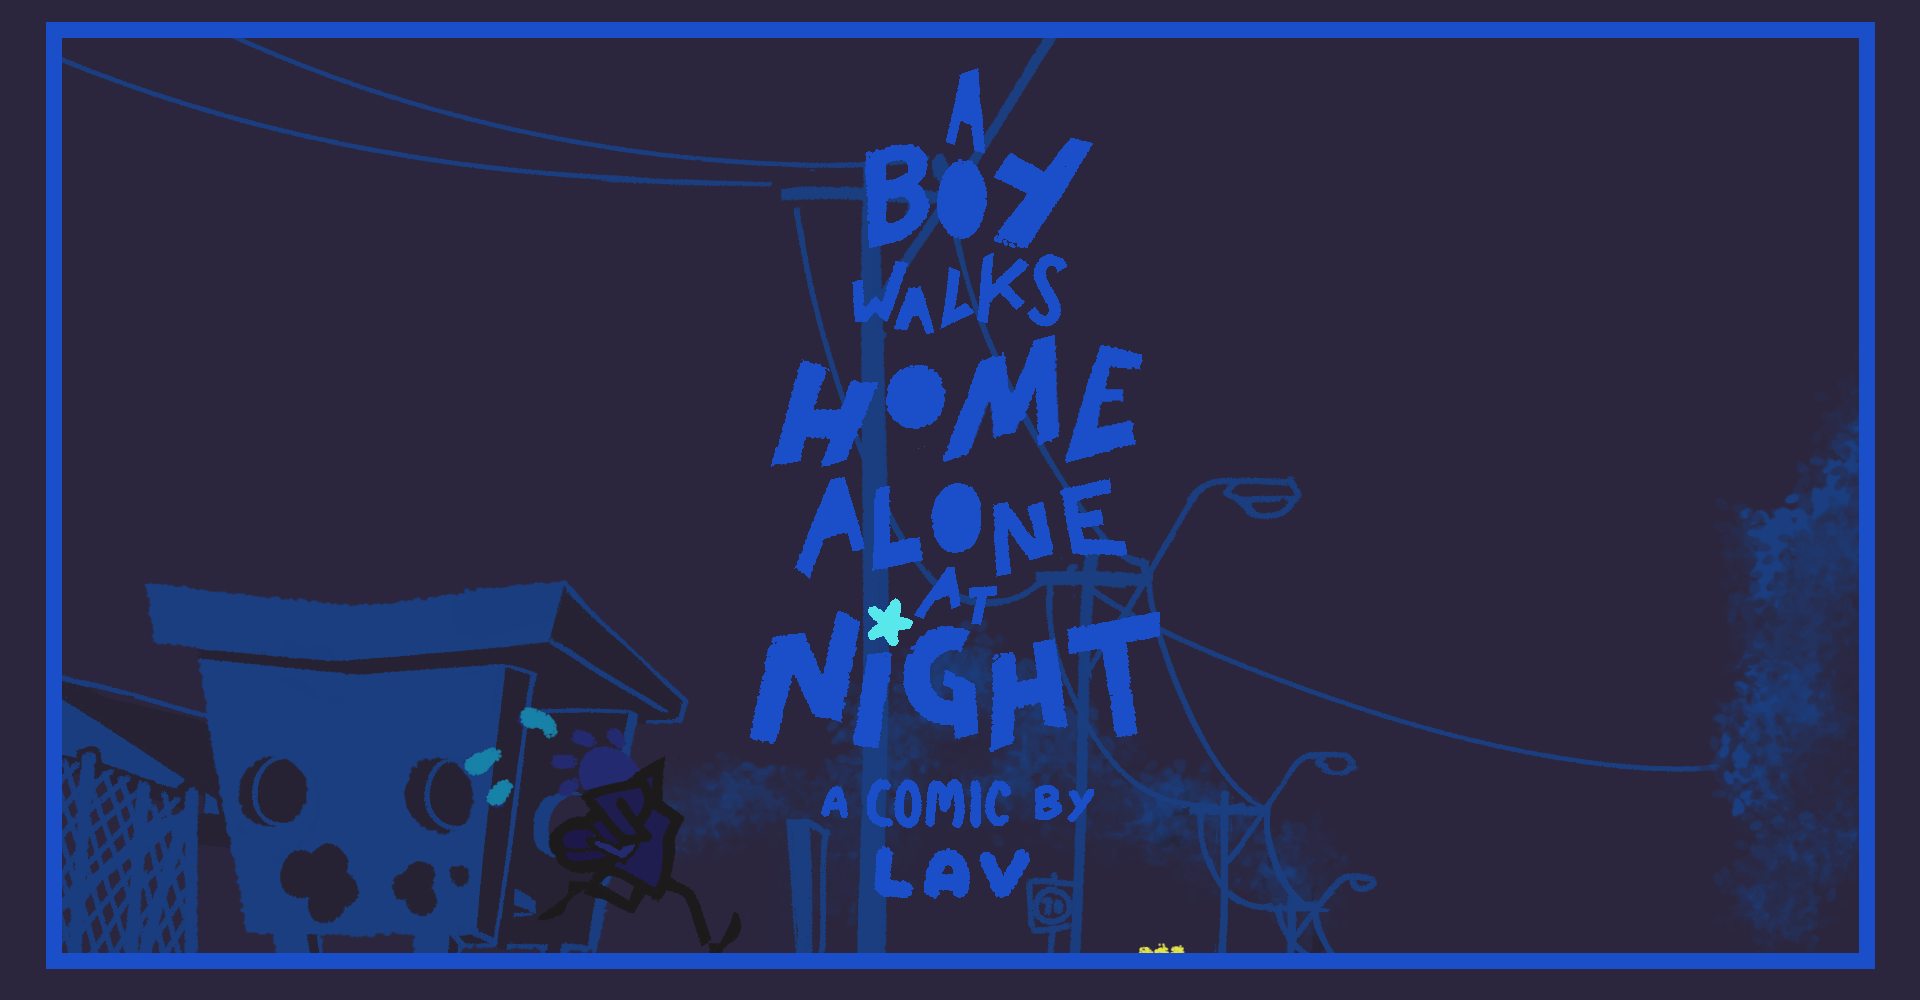 A Boy Walks Home Alone at Night